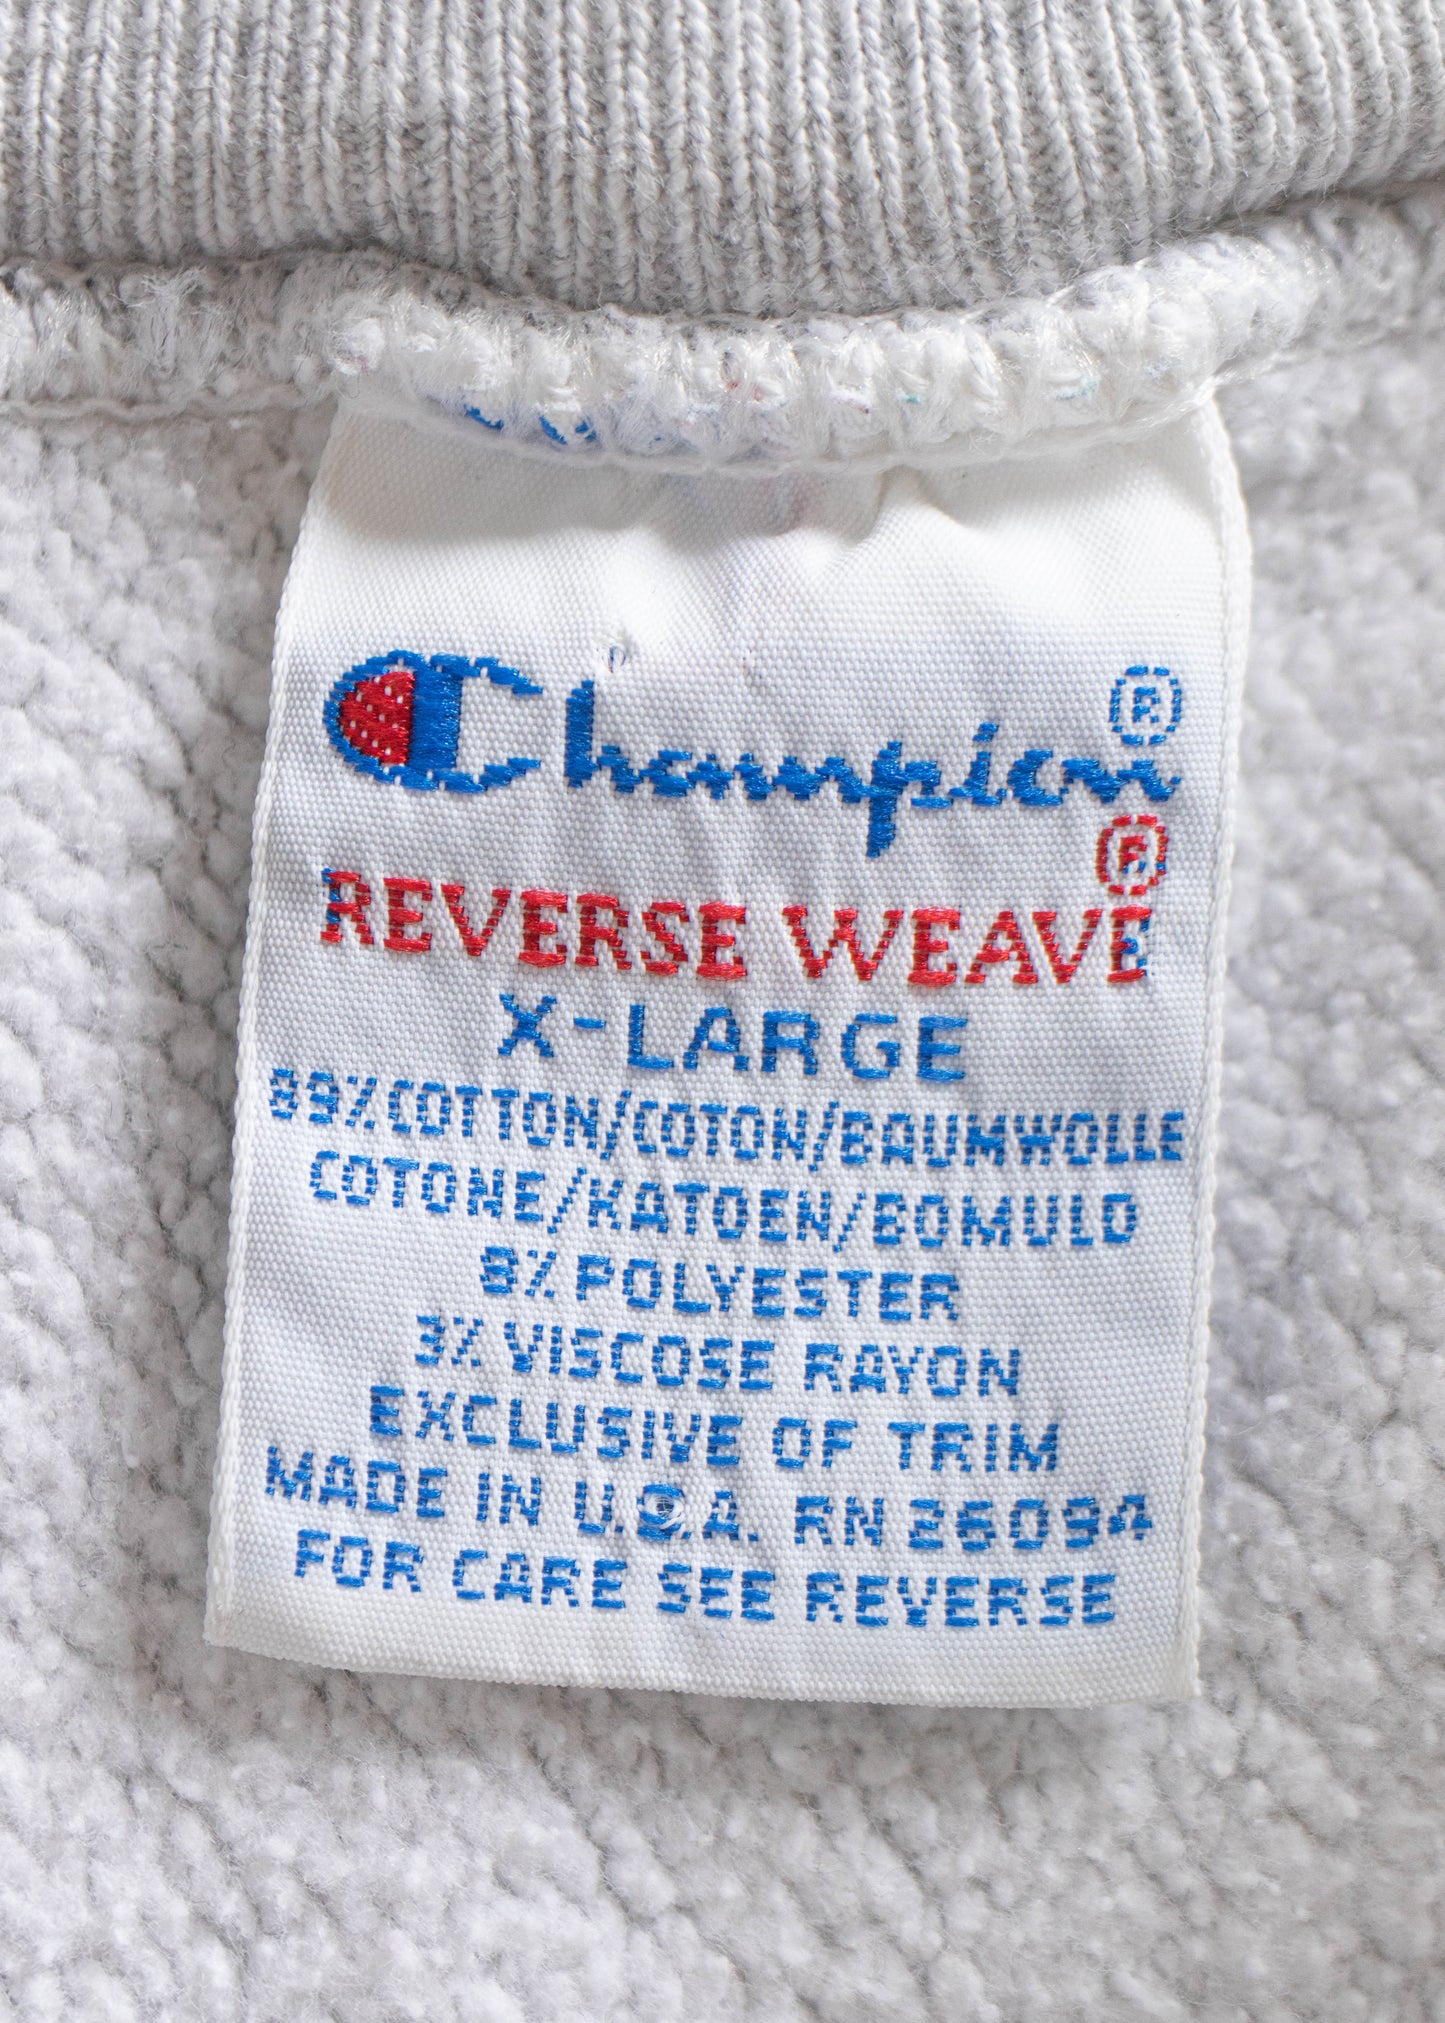 Vintage 1990s Champion Reverse Weave Oswego State Sweatshirt Size M/L